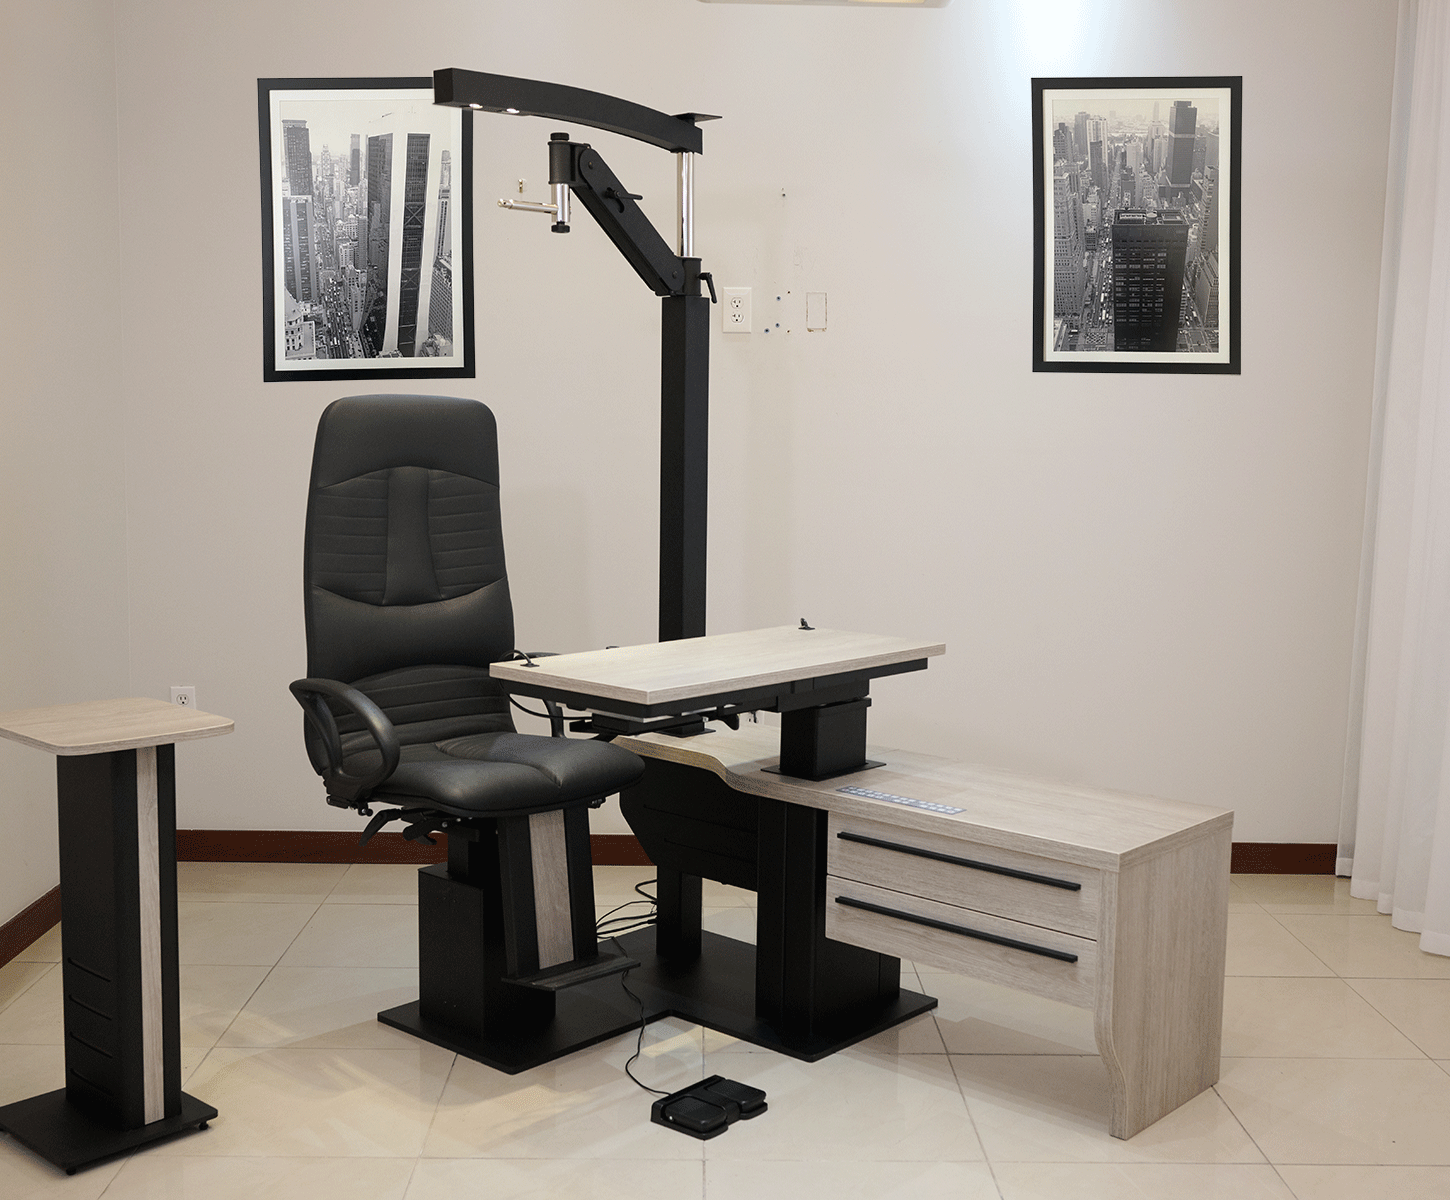 refraction unit venezia elementare - ophthalmic chair